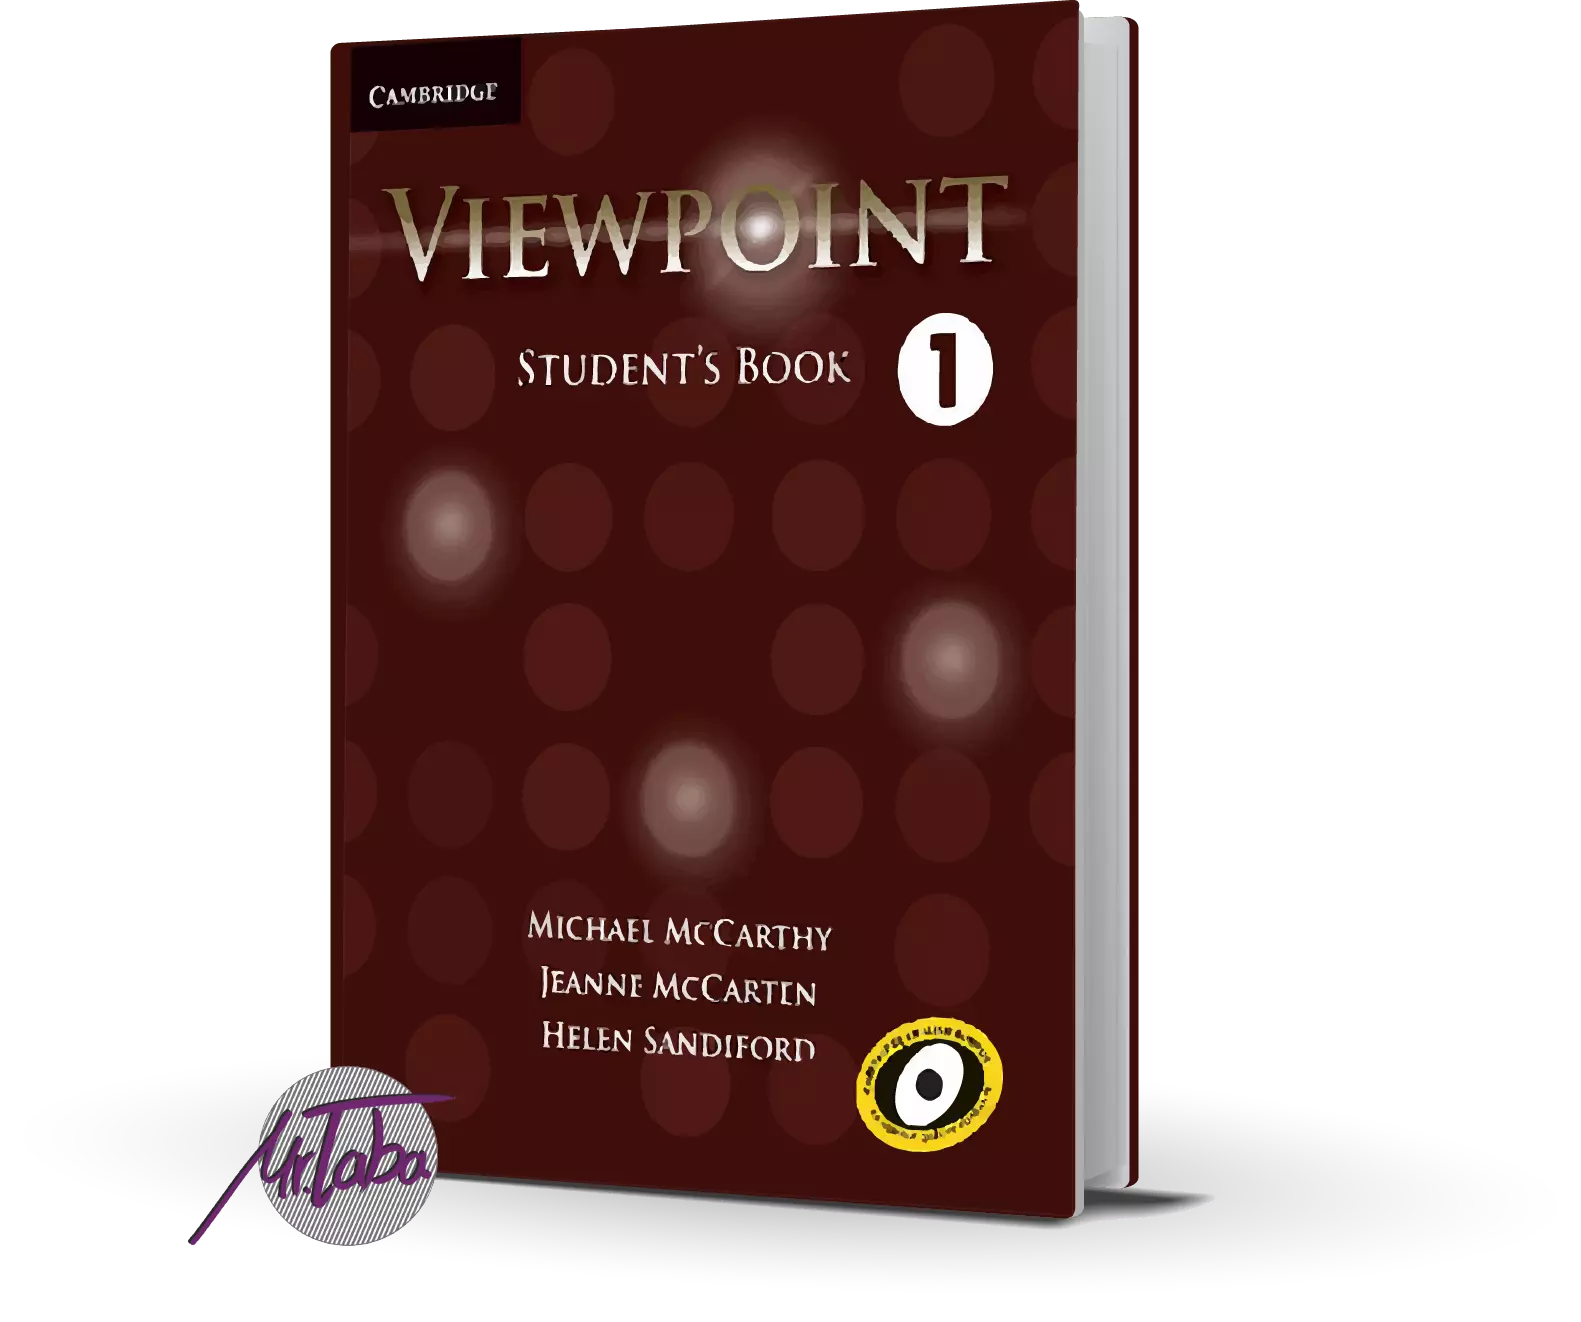 فوری　Viewpoint　خرید　کتاب　ارسال　تخفیف　۵۰٪